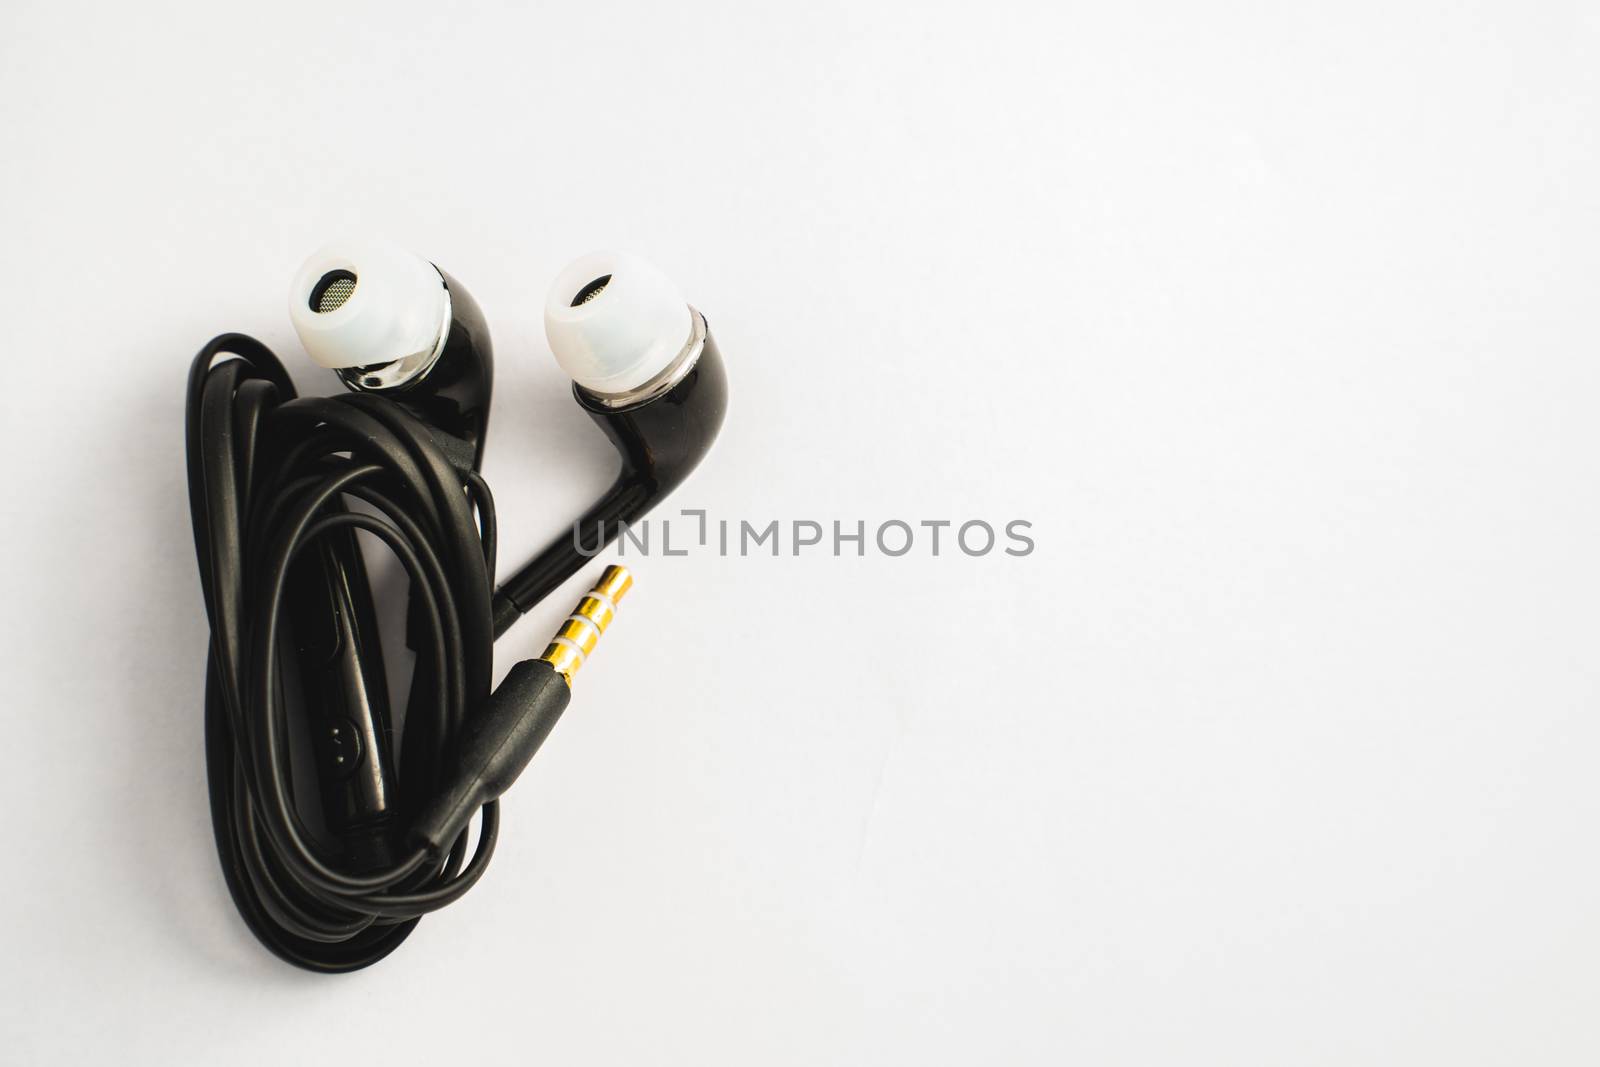 white earphones on a black net bag background by peerapixs